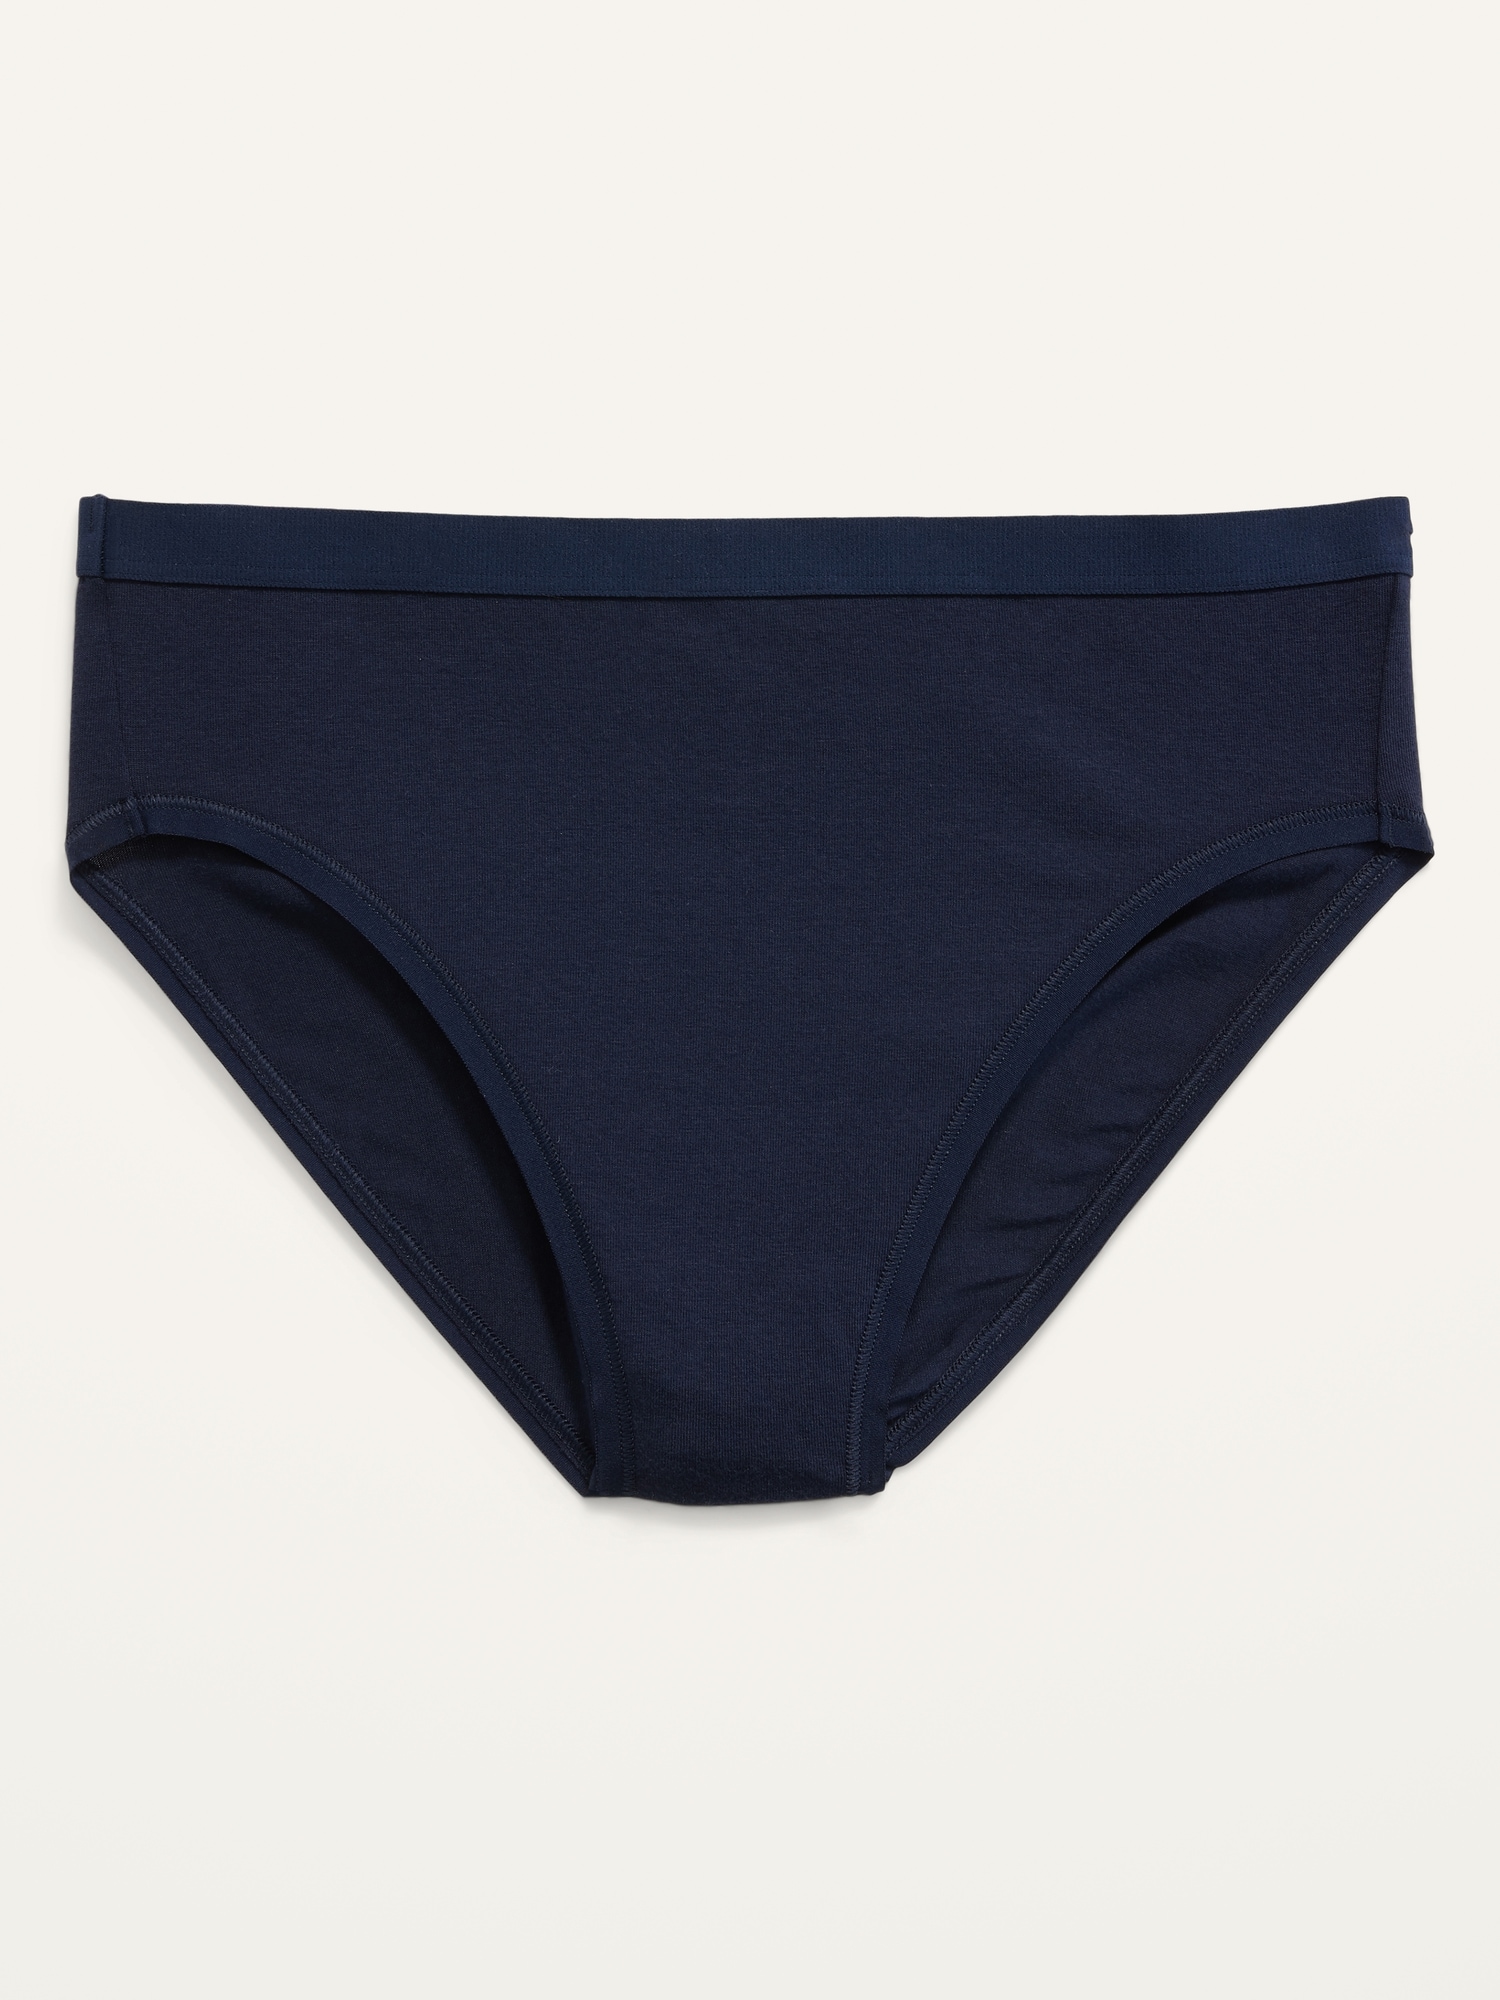 YWDJ High Waisted Underwear for Women Women Satin Panties Mid Waist Wavy  Cotton Briefs Blue S 